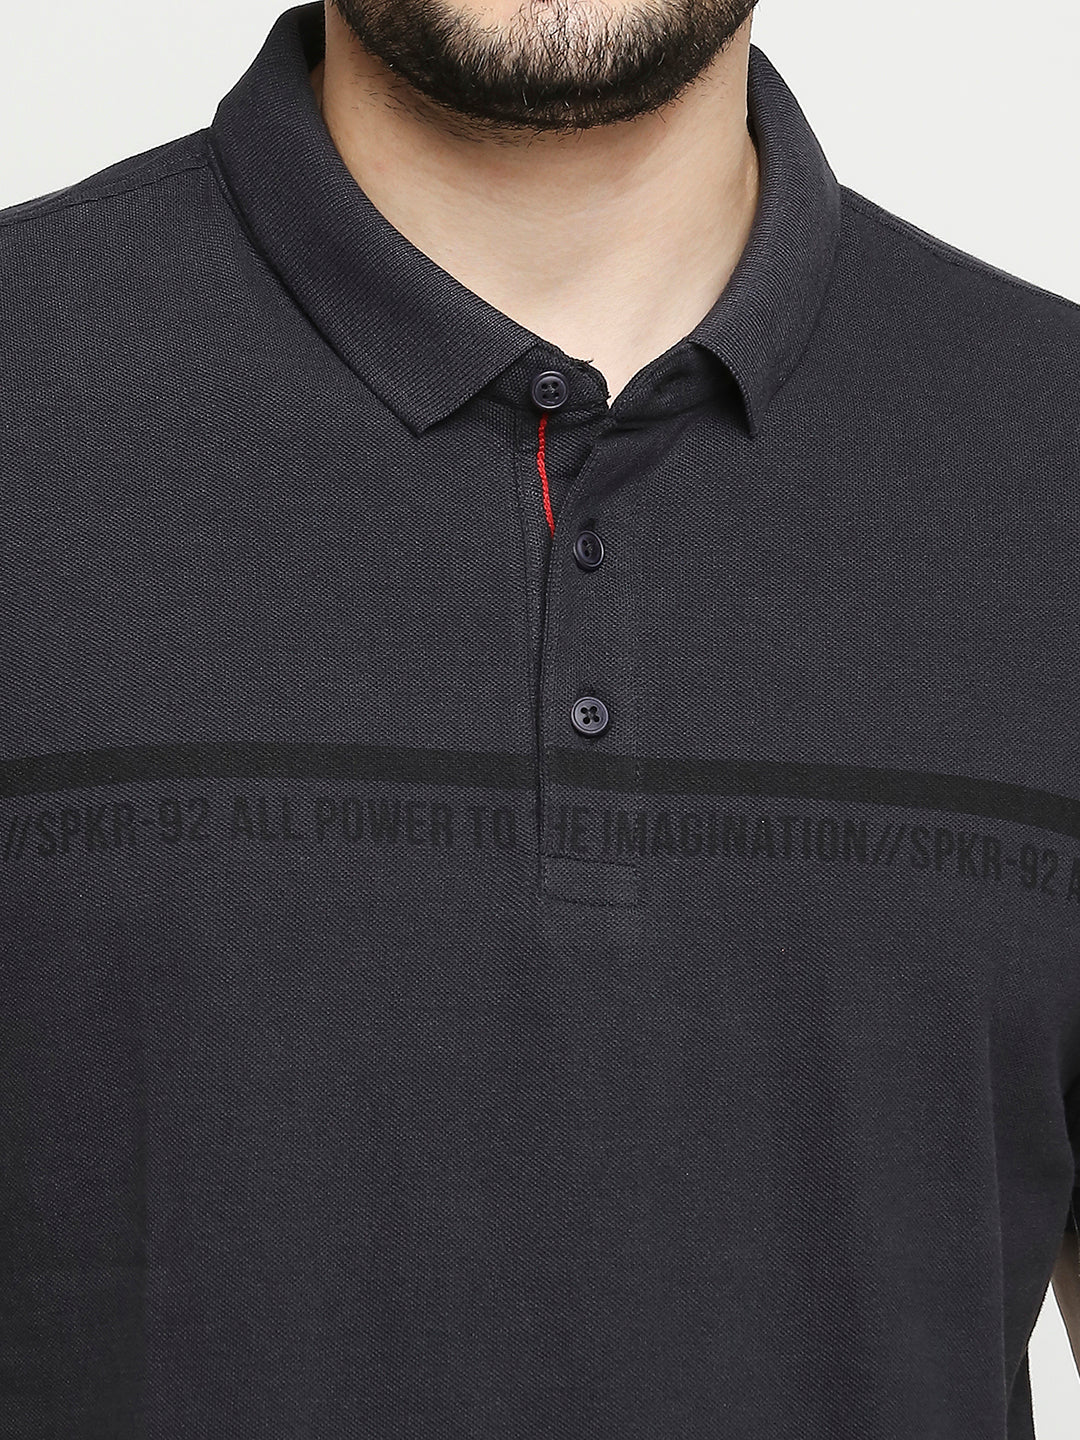 Spykar Slate Grey Cotton Half Sleeve Printed Polo T-Shirts for Men